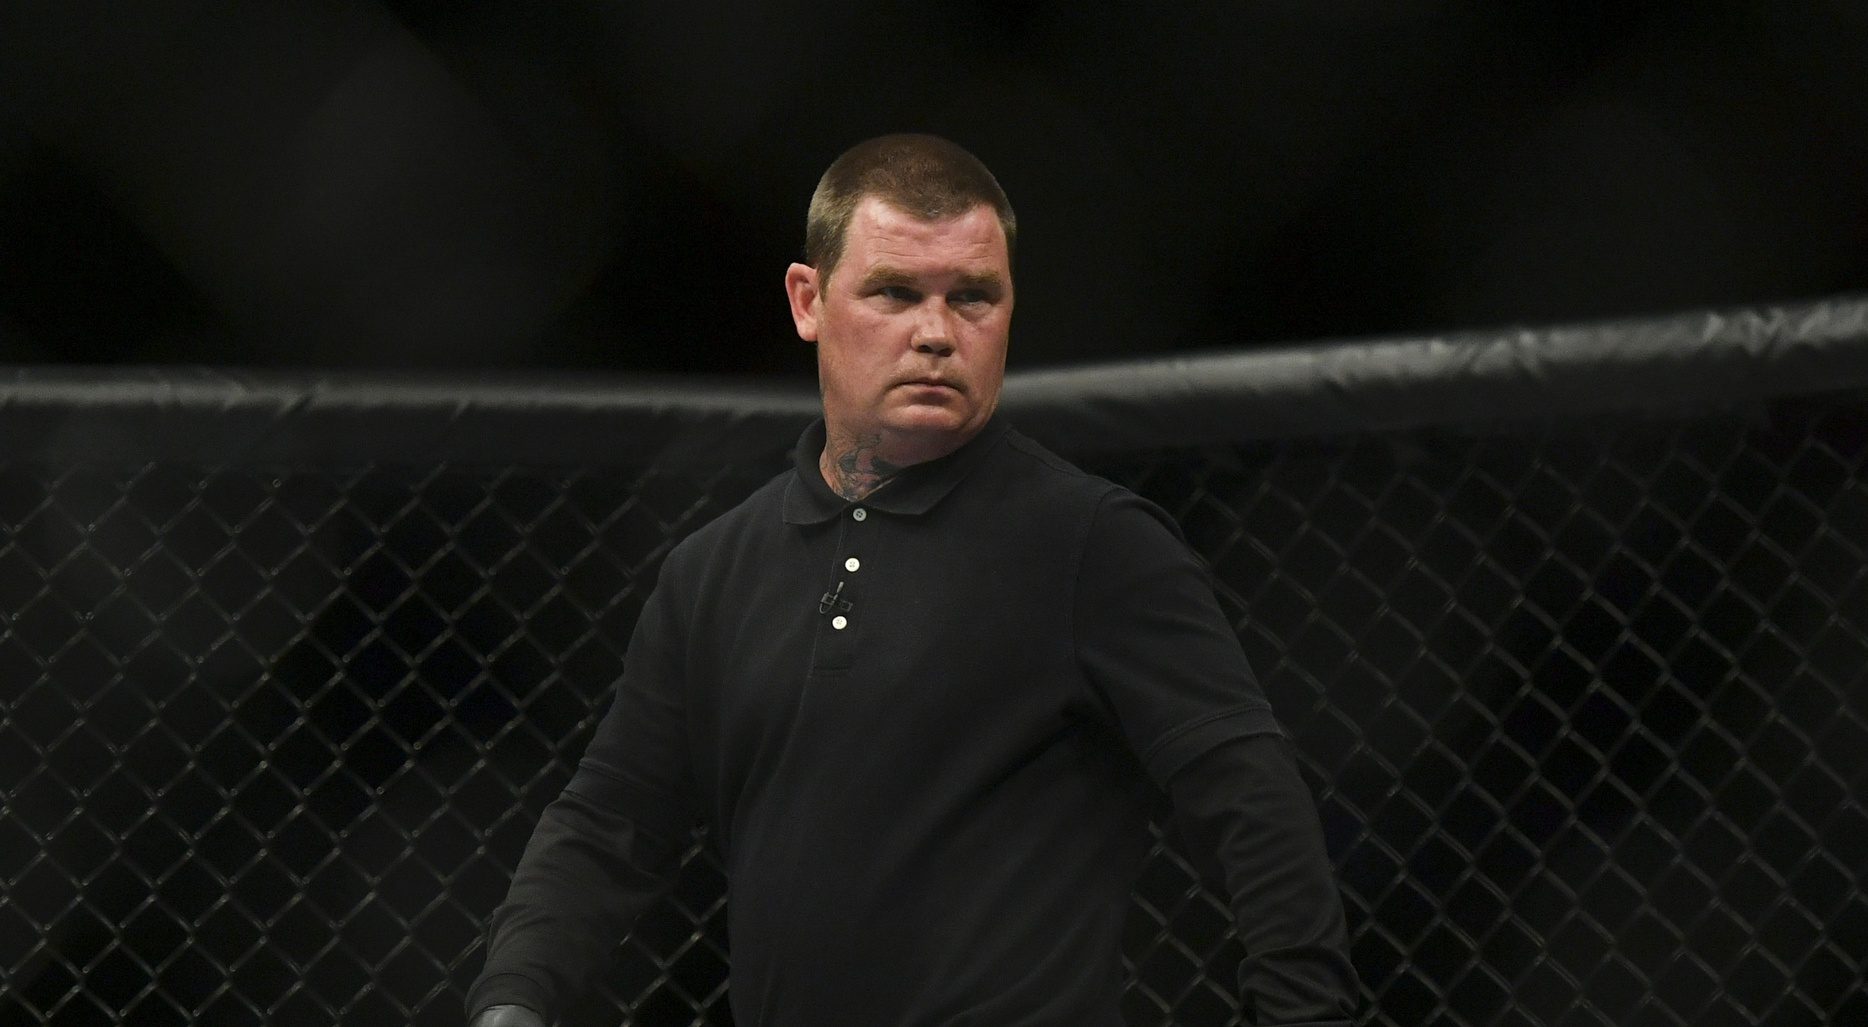 UFC referee Keith Peterson